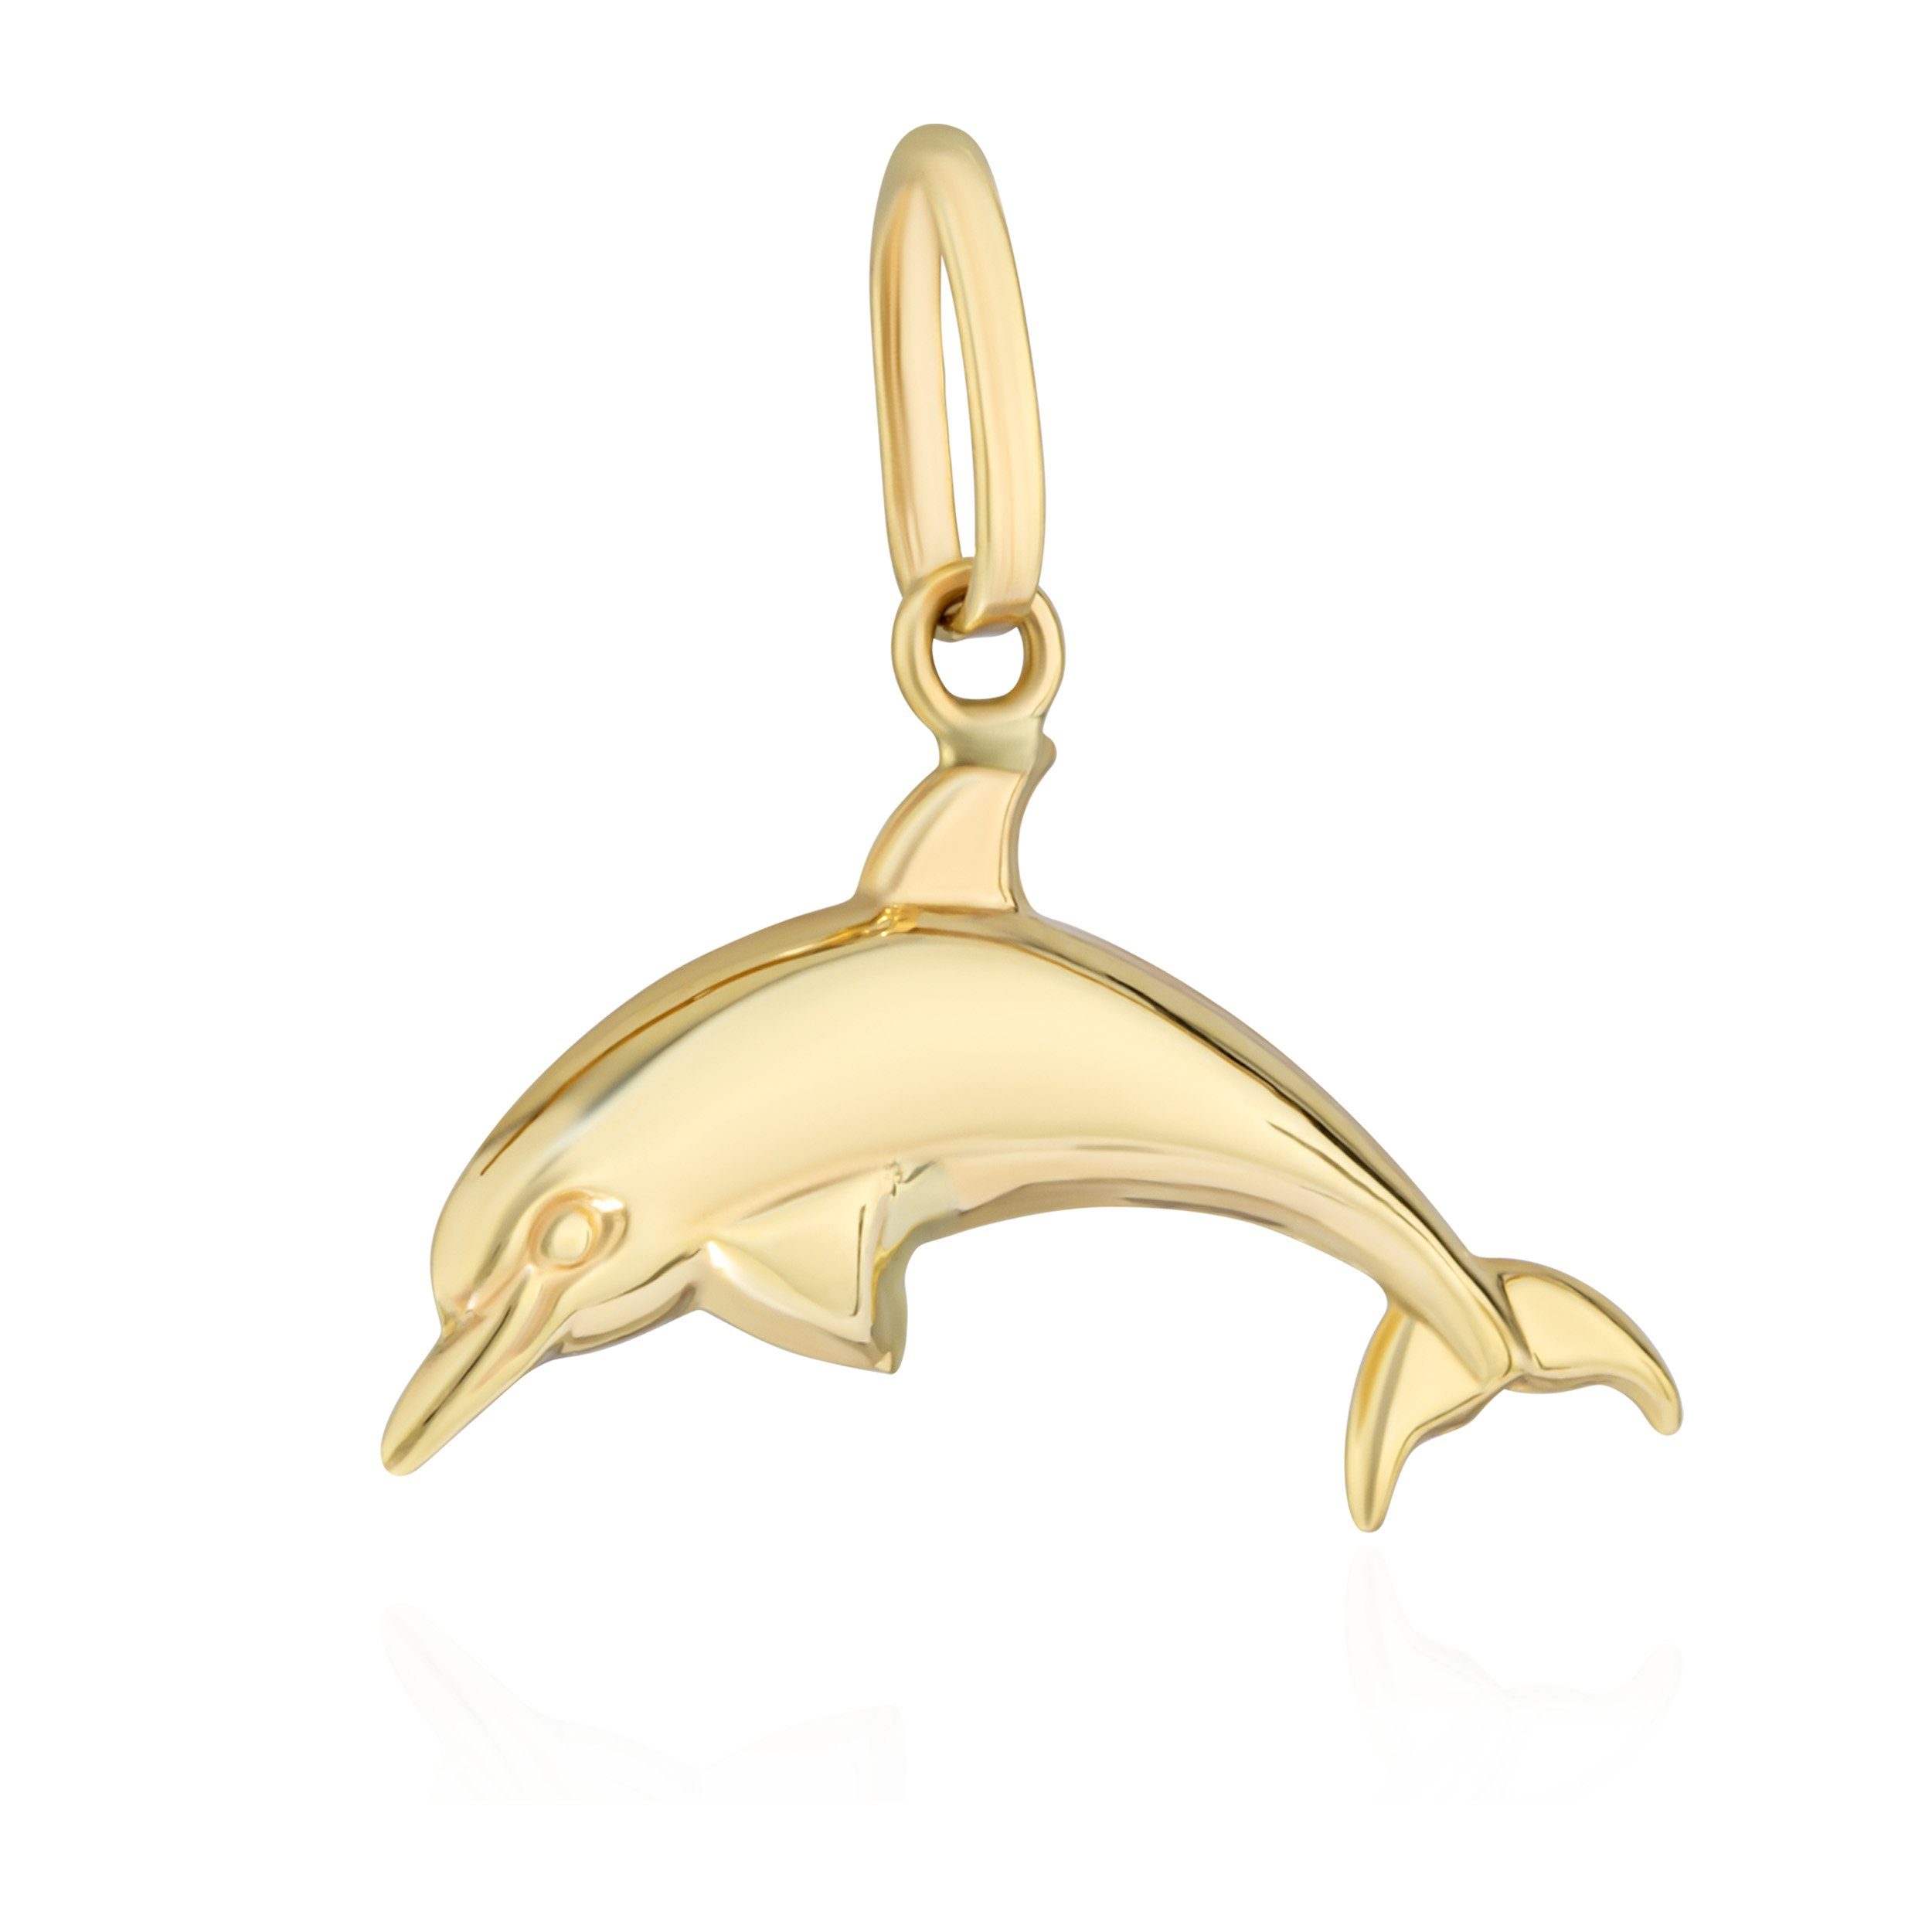 NKlaus Kettenanhänger Kettenanhänger Delfin 333 Gelb gold 8 Karat 18x10mm Talisman Amulett A